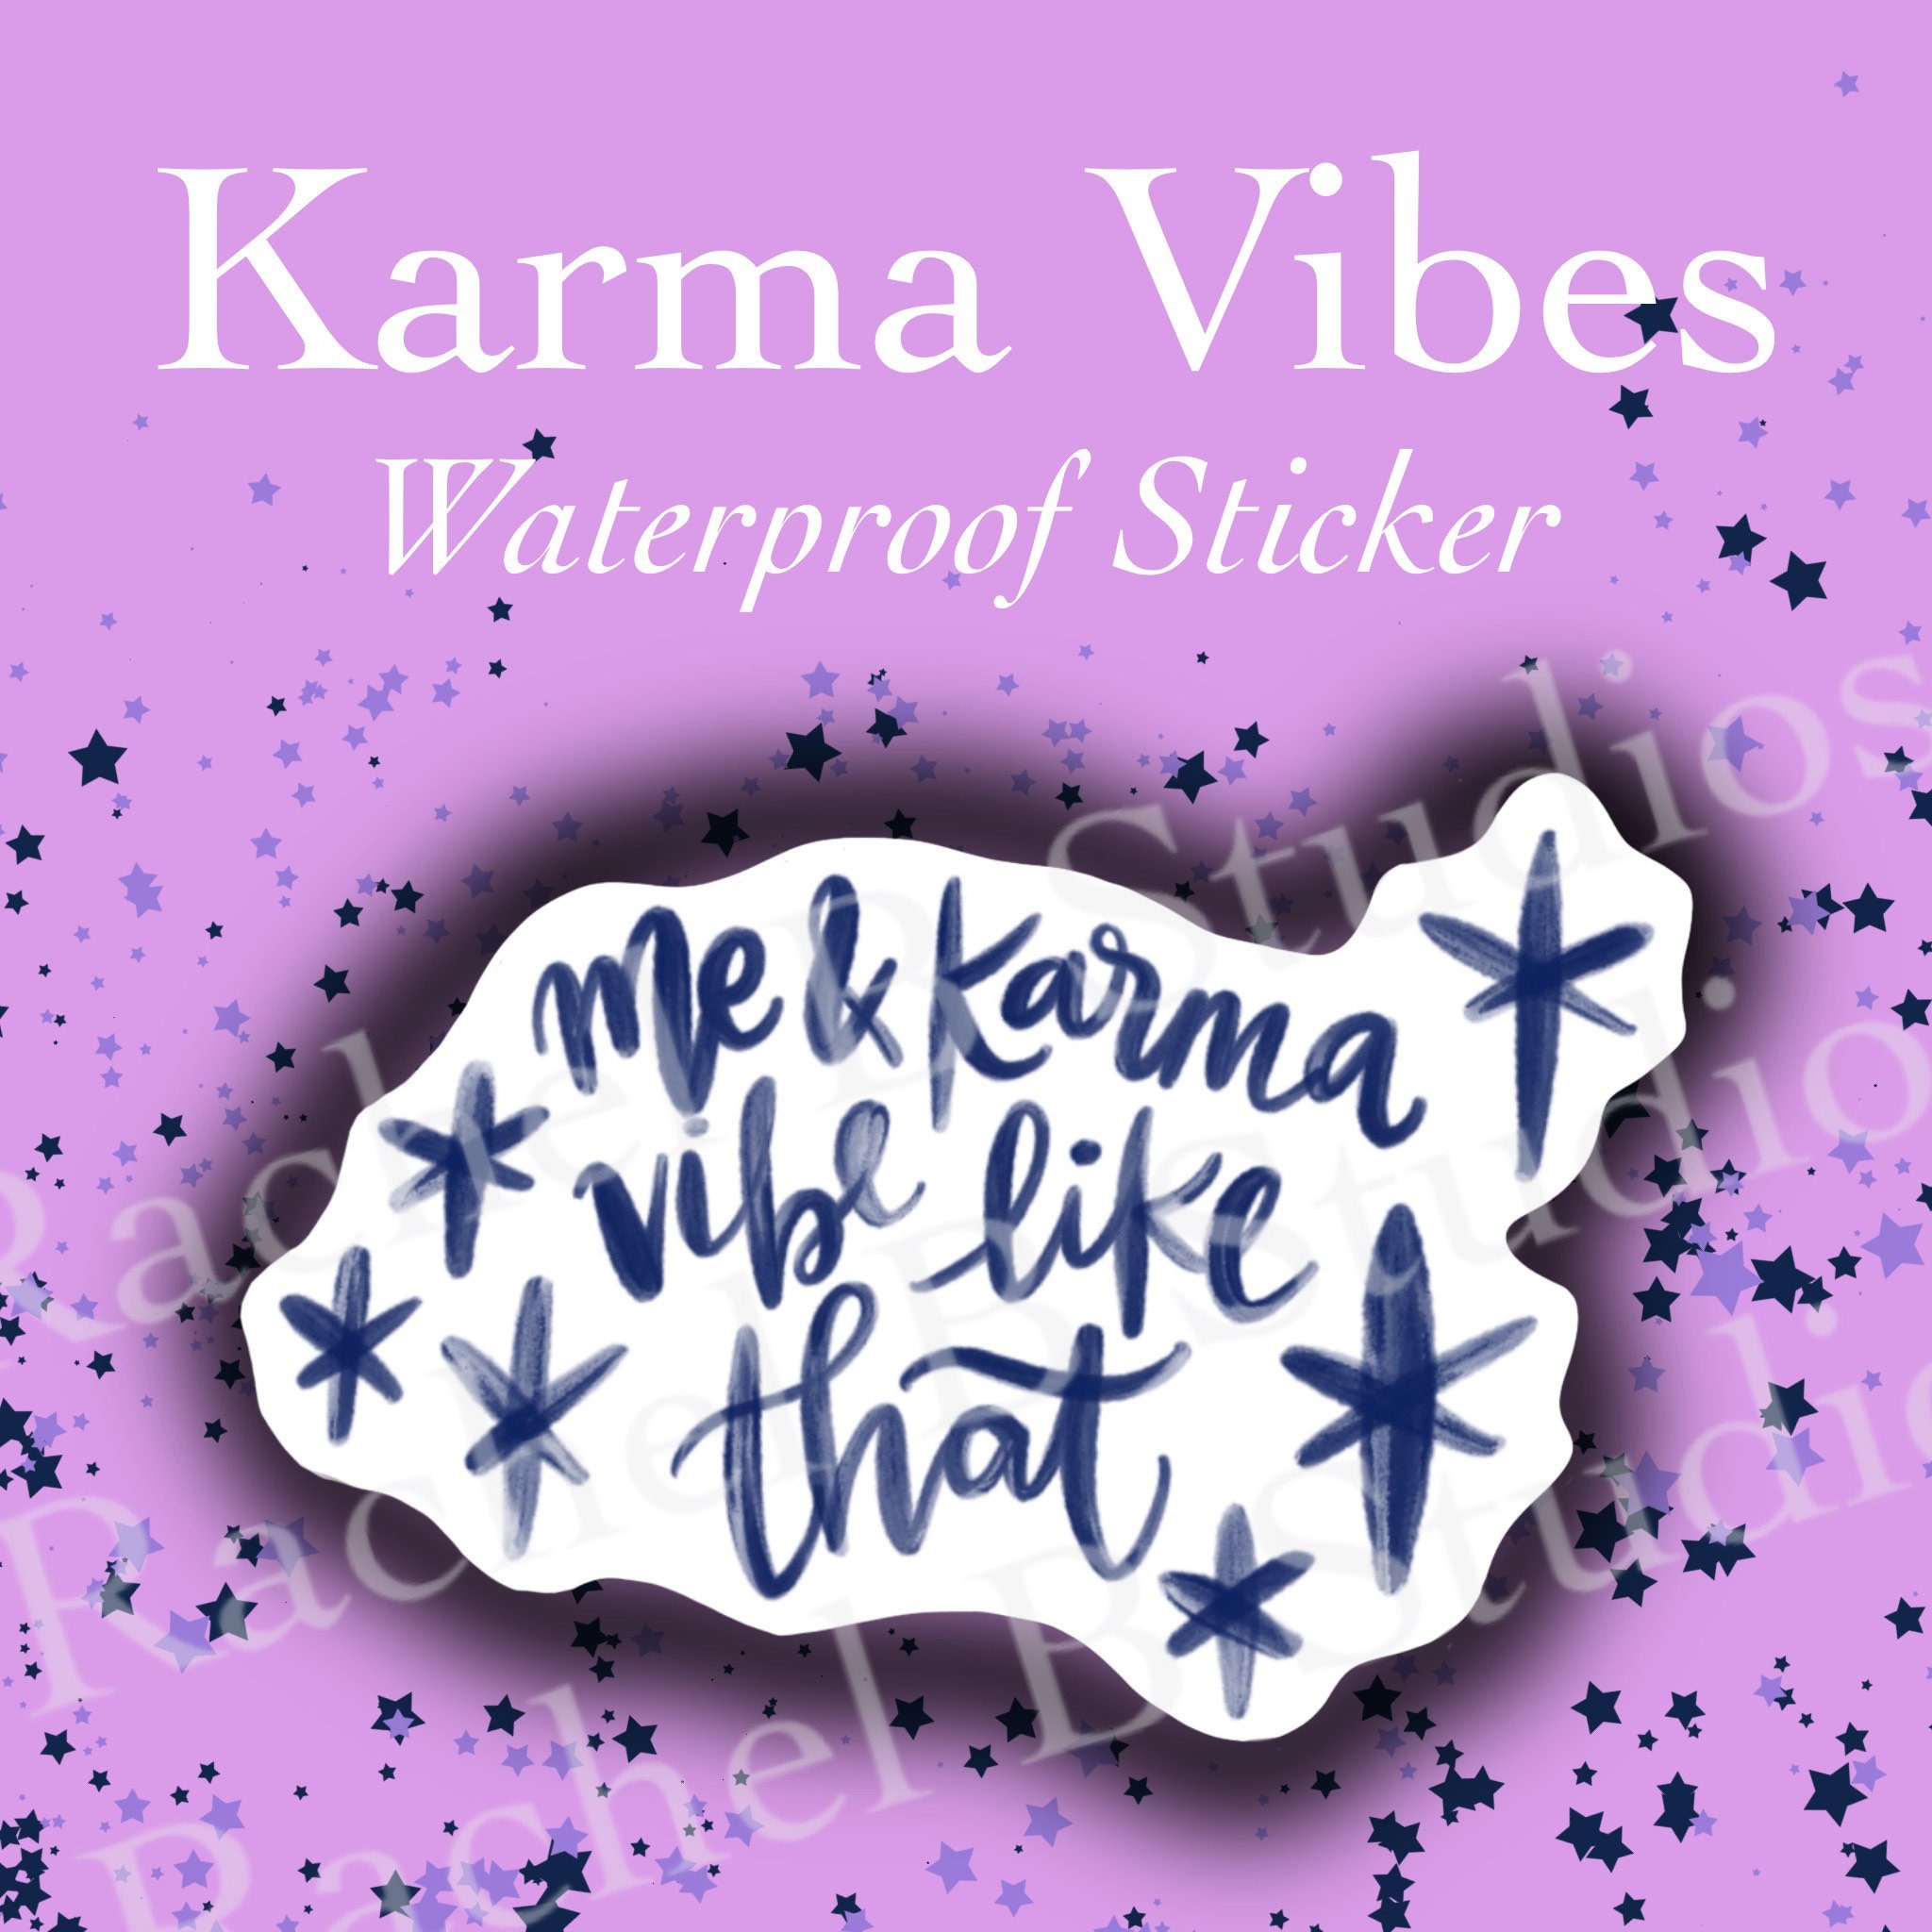 Karma-street clean Sticker for Sale by Roseyletters